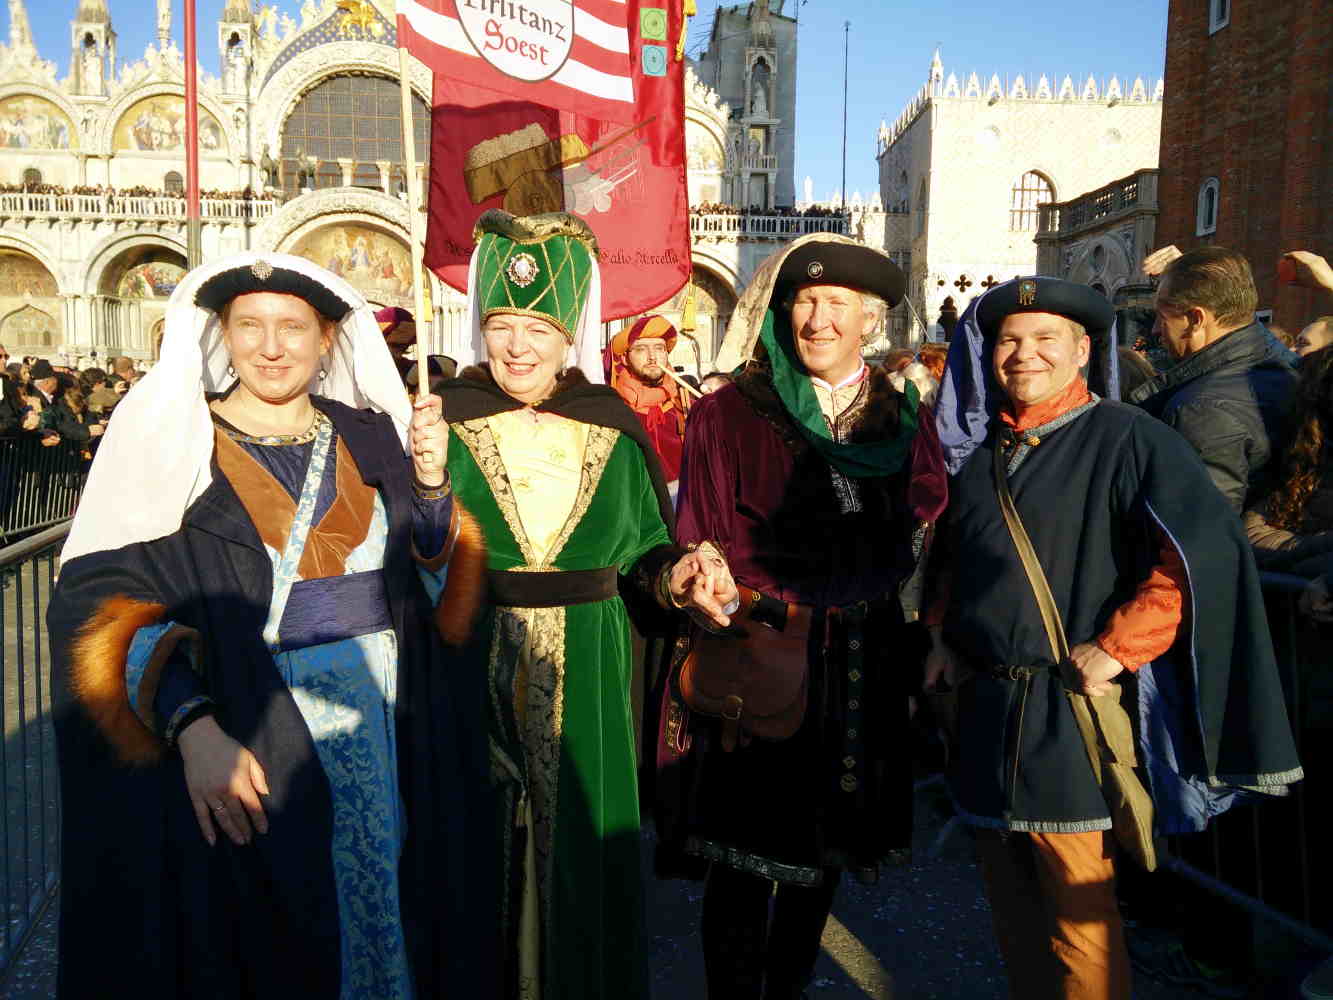 Firlitanz aus Soest vor dem Dogenpalast in Venedig